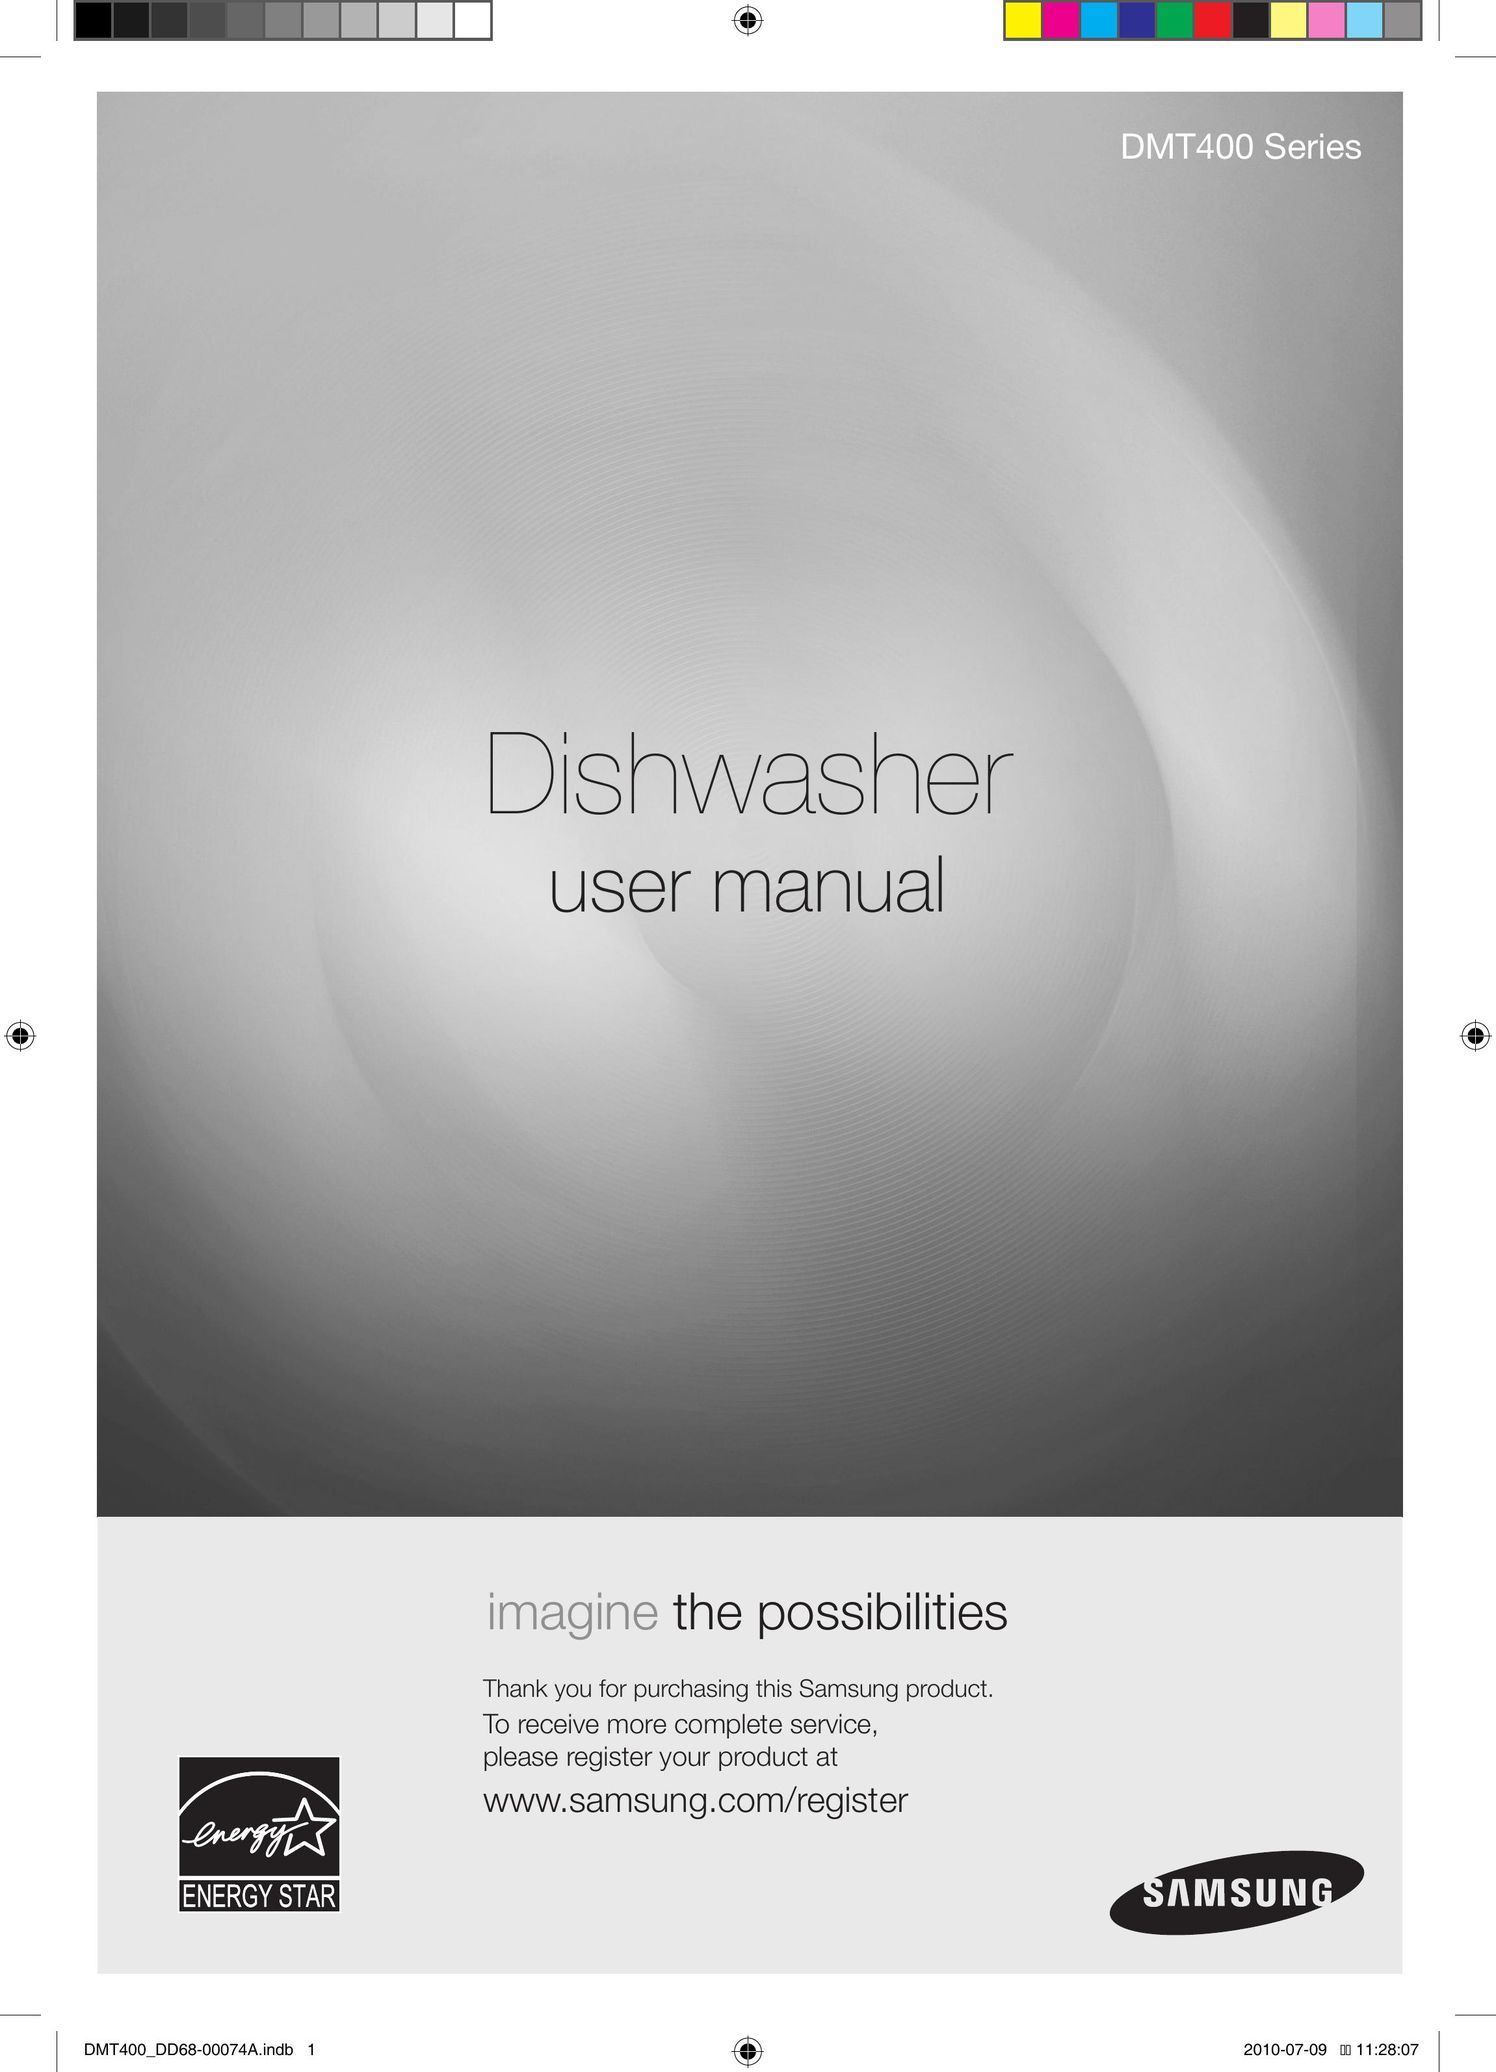 Samsung DMT400RHW Dishwasher User Manual